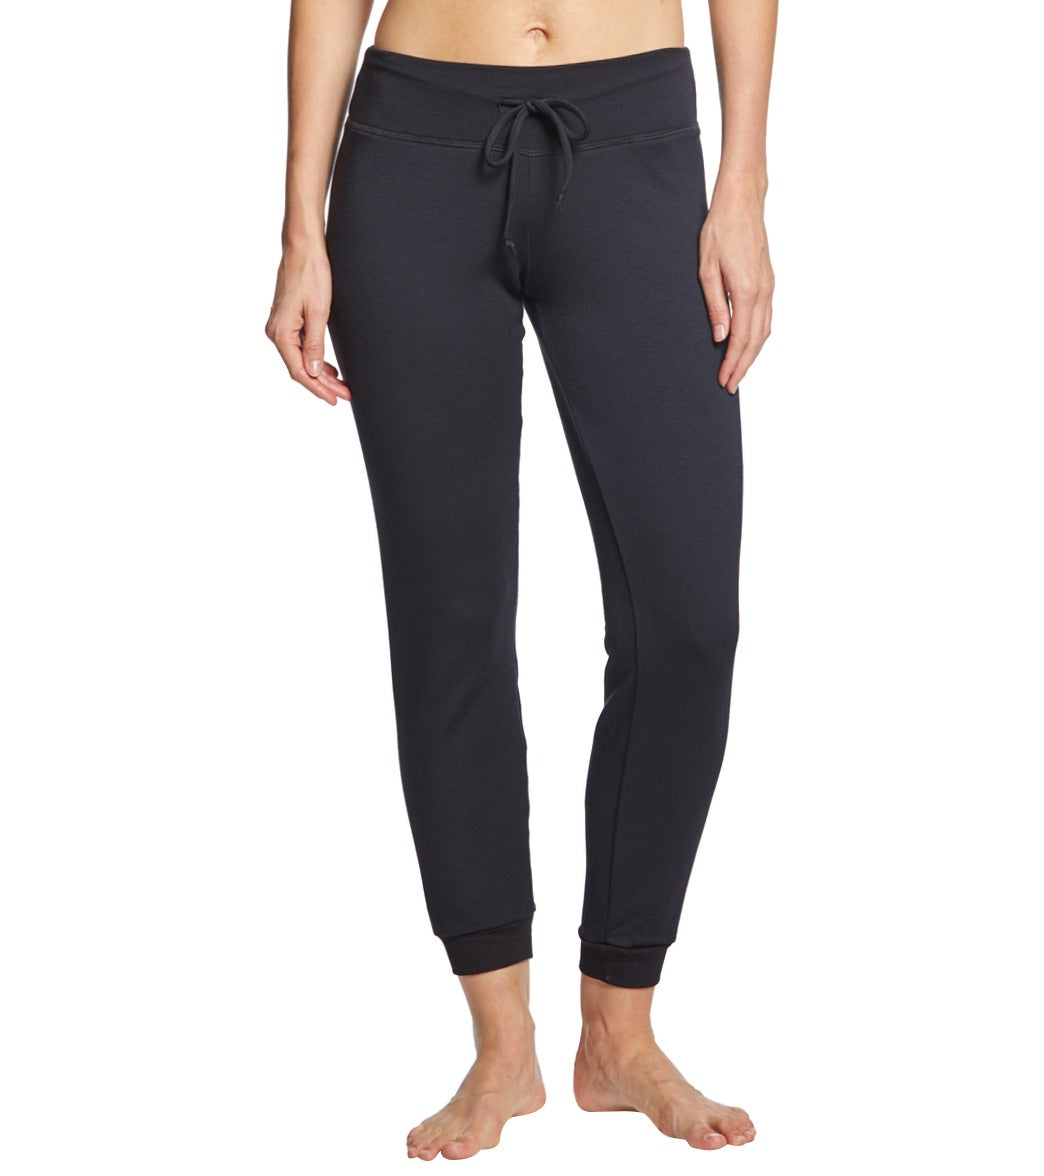 Just Cozy Multi Color Teal Sweatpants Size XL - 65% off